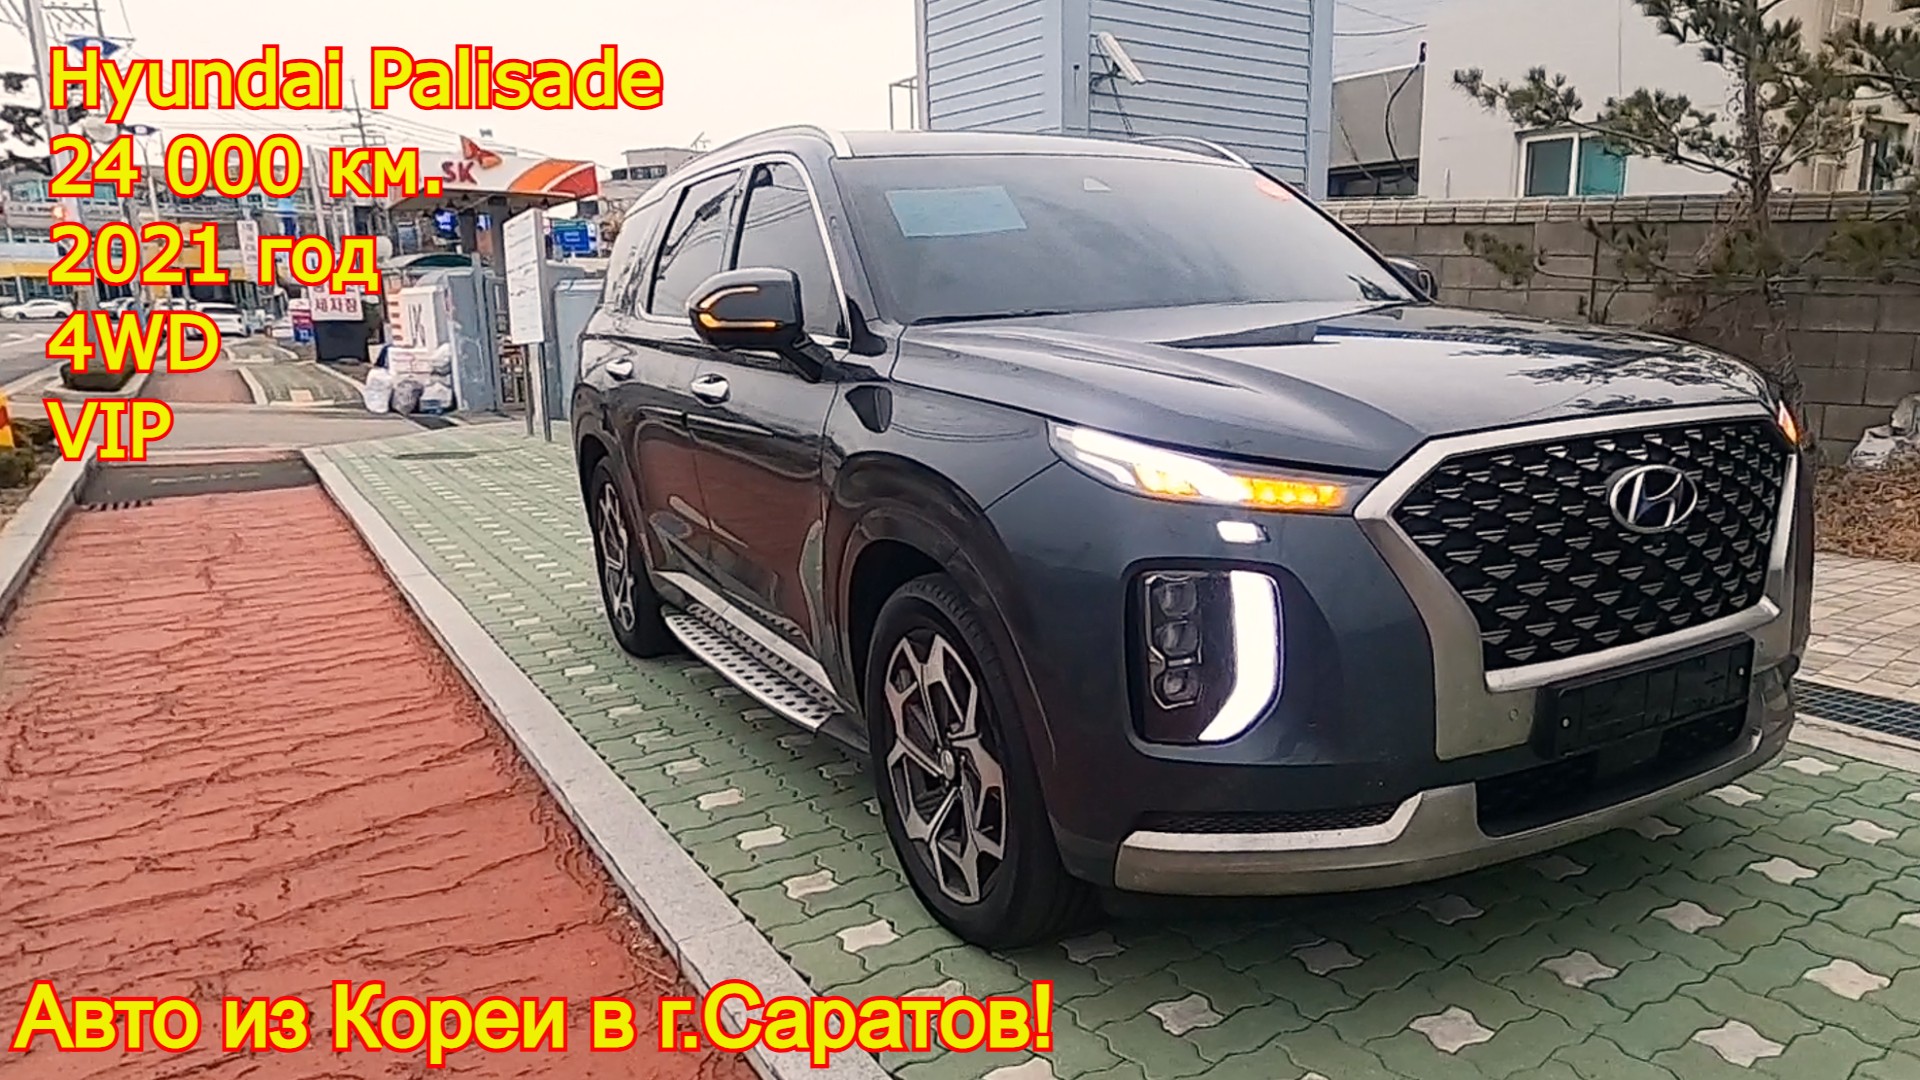 Авто из Кореи - Hyundai Palisade, 2021 год, 24 000 км., VIP.